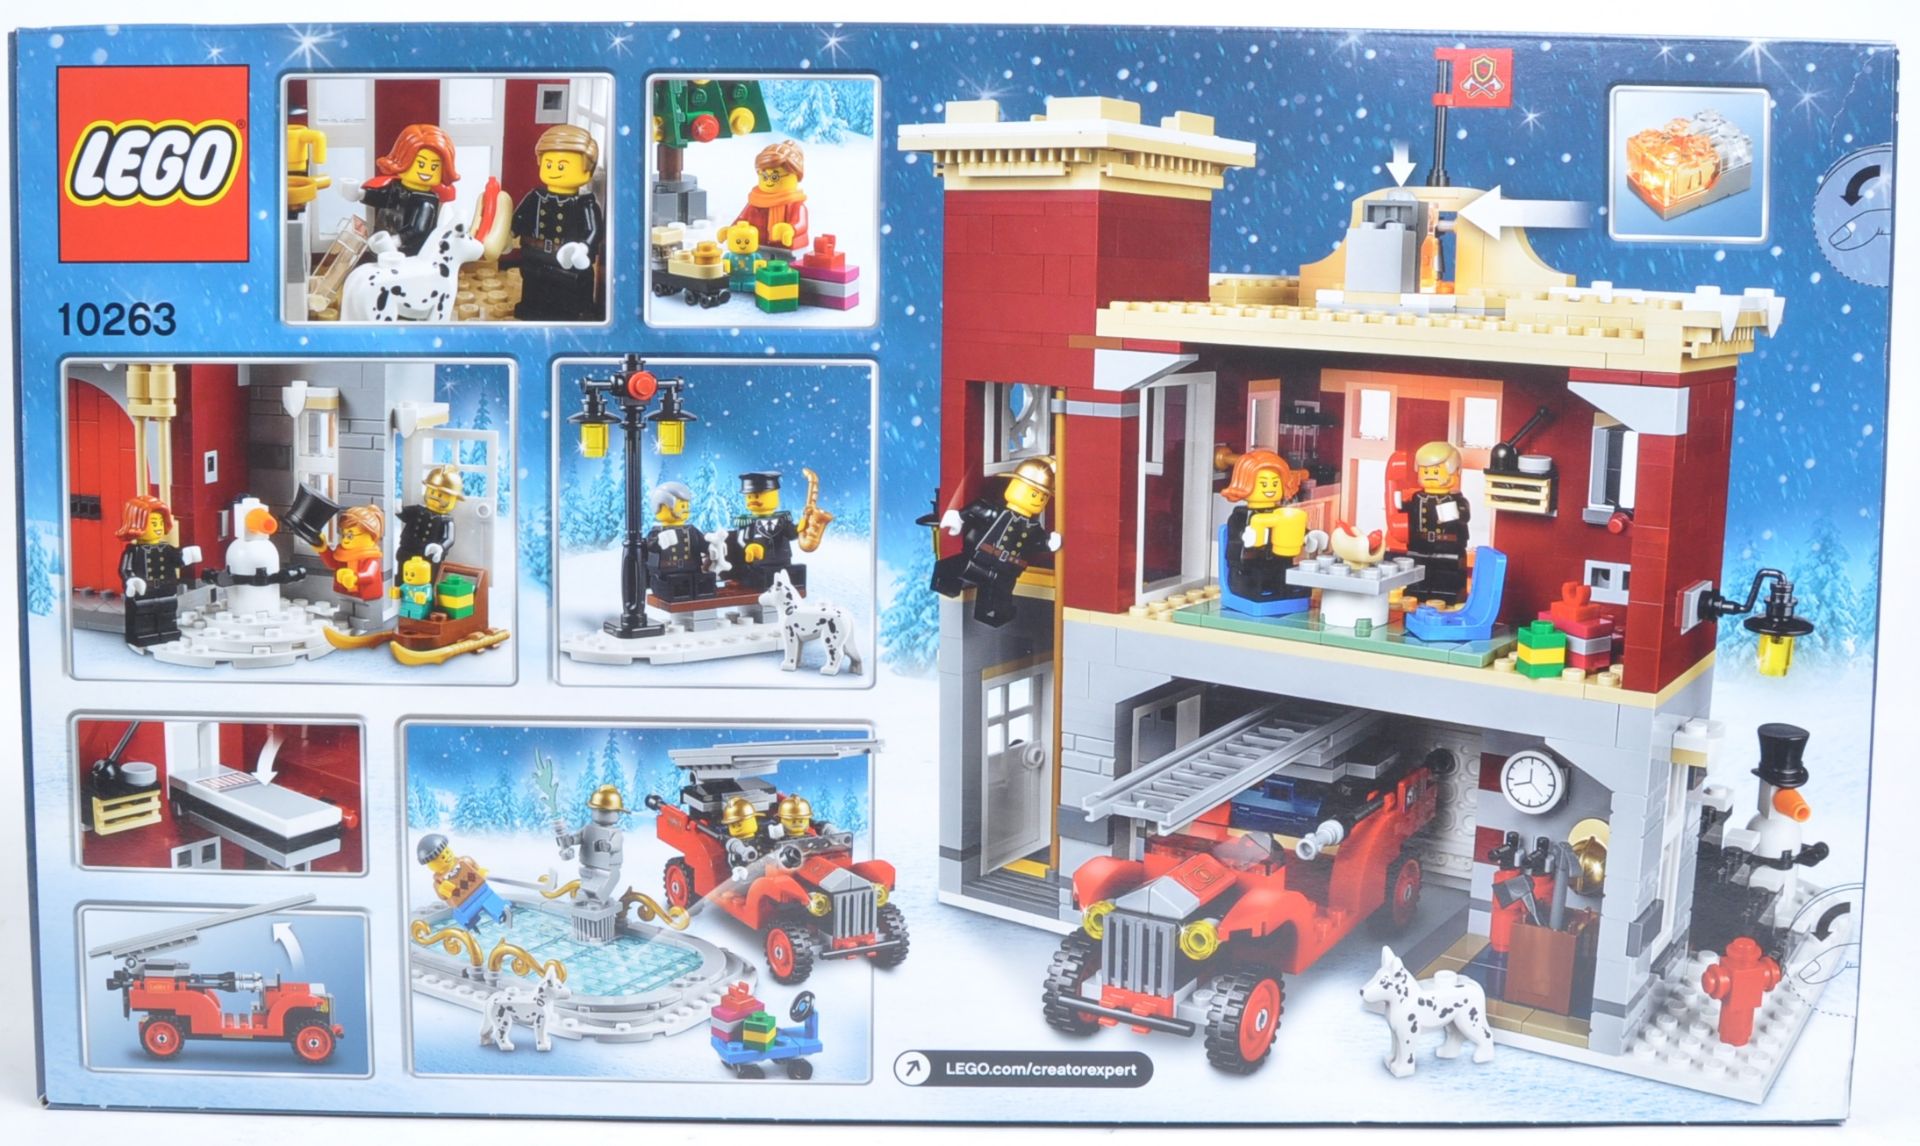 LEGO SET - LEGO CREATOR - 10263 - WINTER VILLAGE FIRE STATION - Image 2 of 4